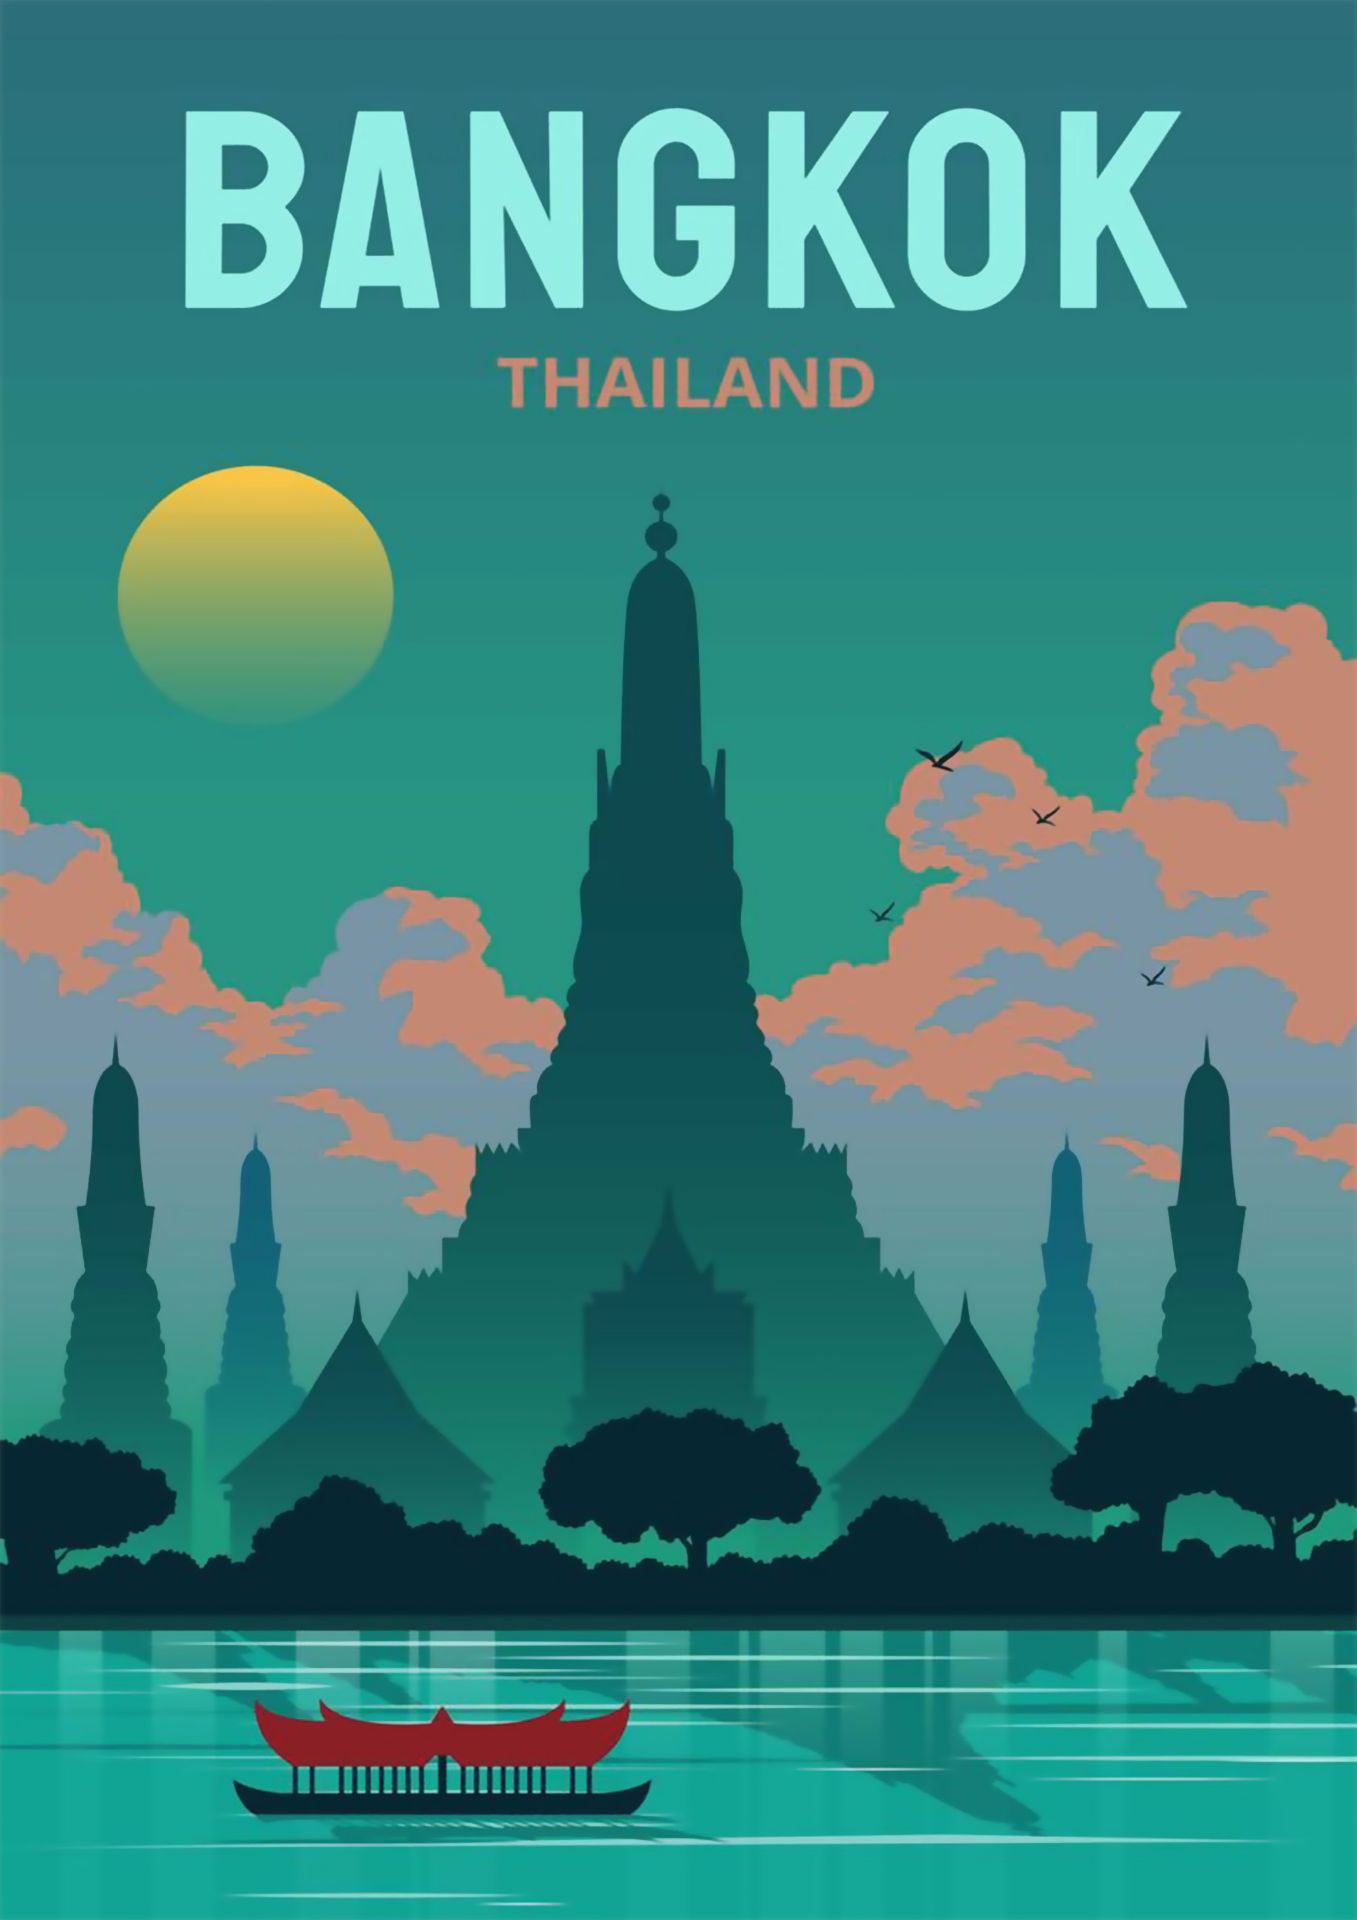 Bangkok, Thailand Travel Poster